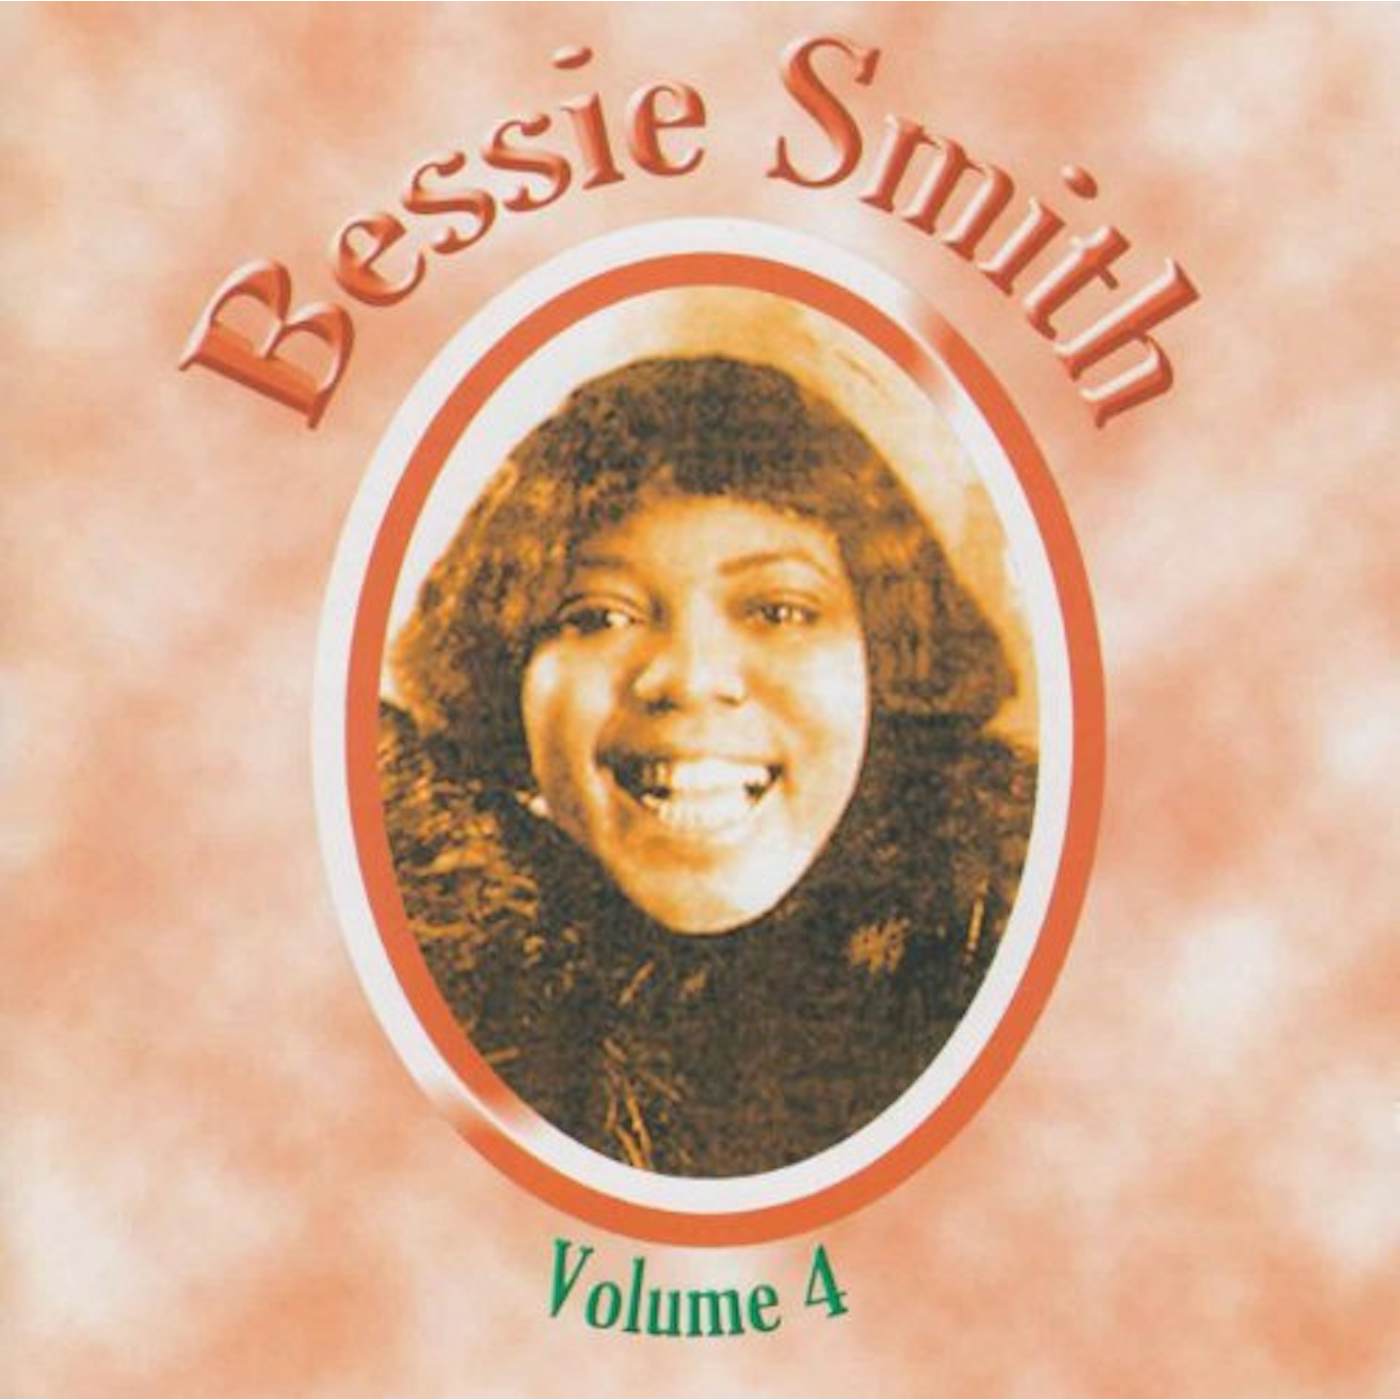 Bessie Smith COMPLETE RECORDINGS 4 CD